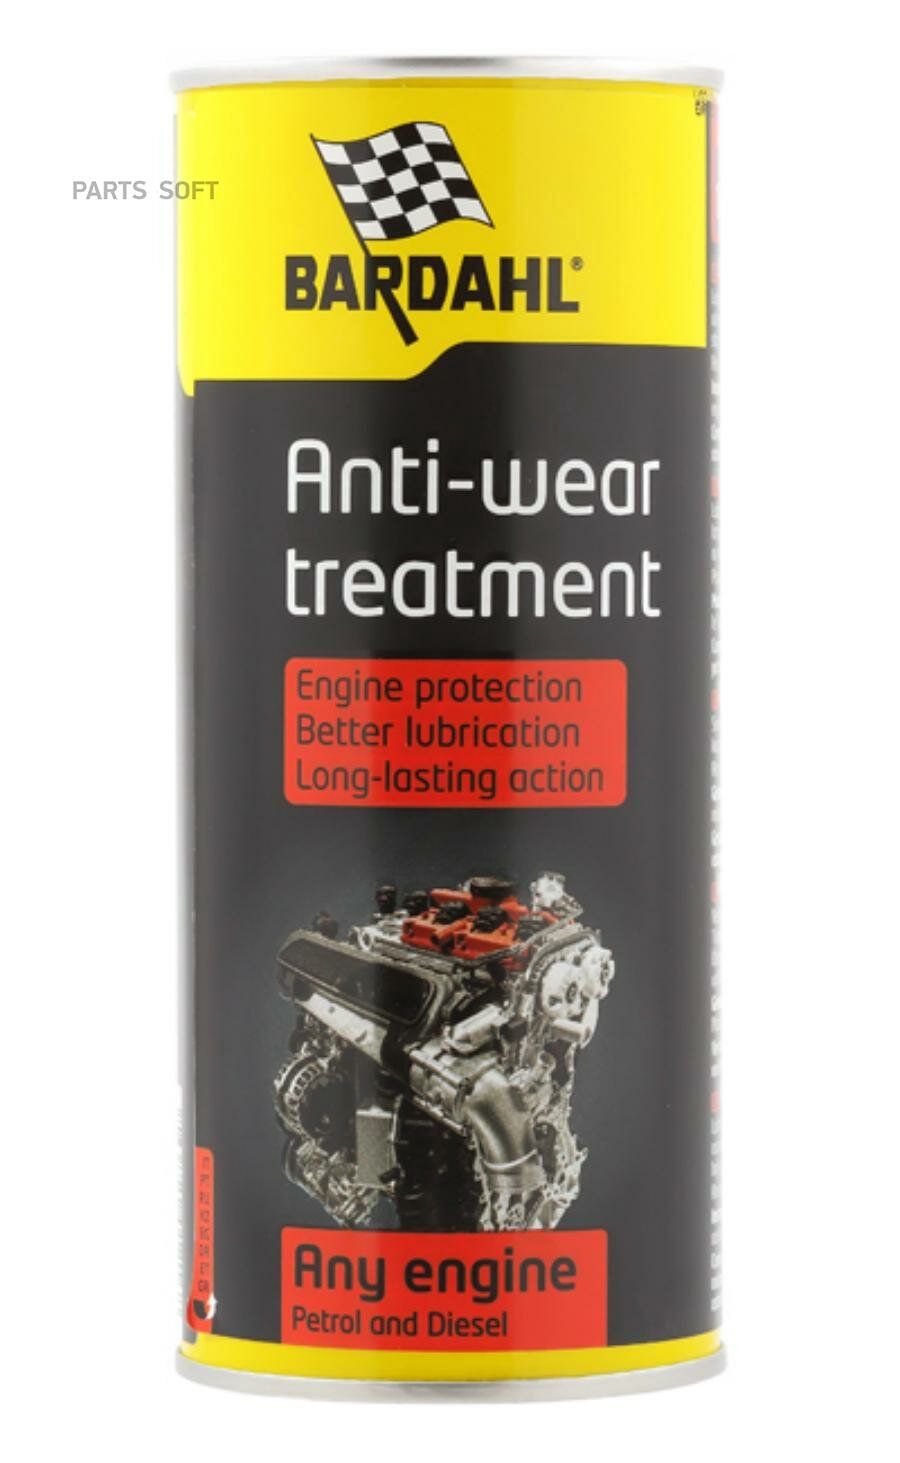 Bardahl Anti-wear treatment